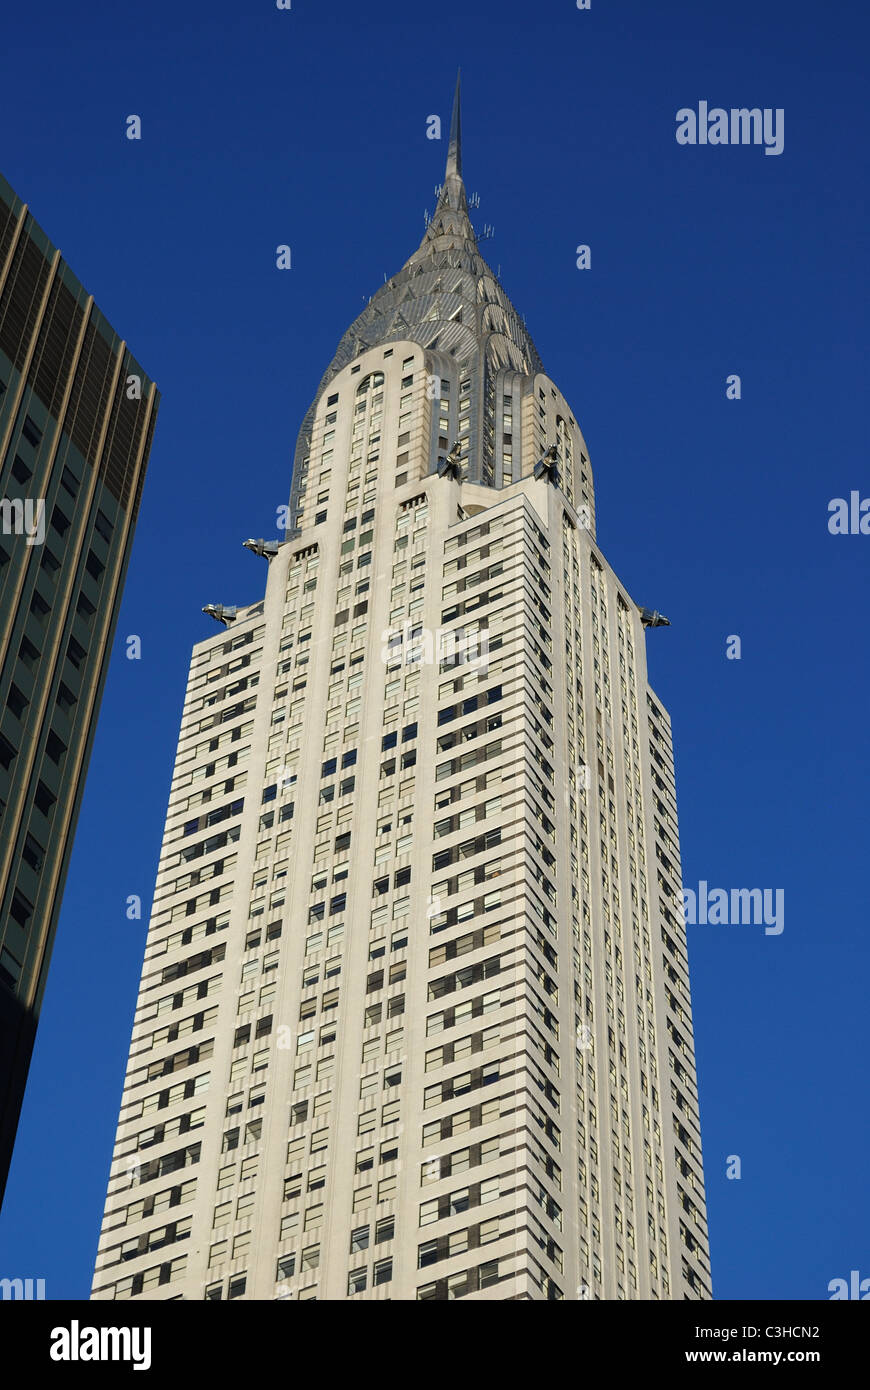 The Historic Chrysler Building in New York, New York. Stock Photo